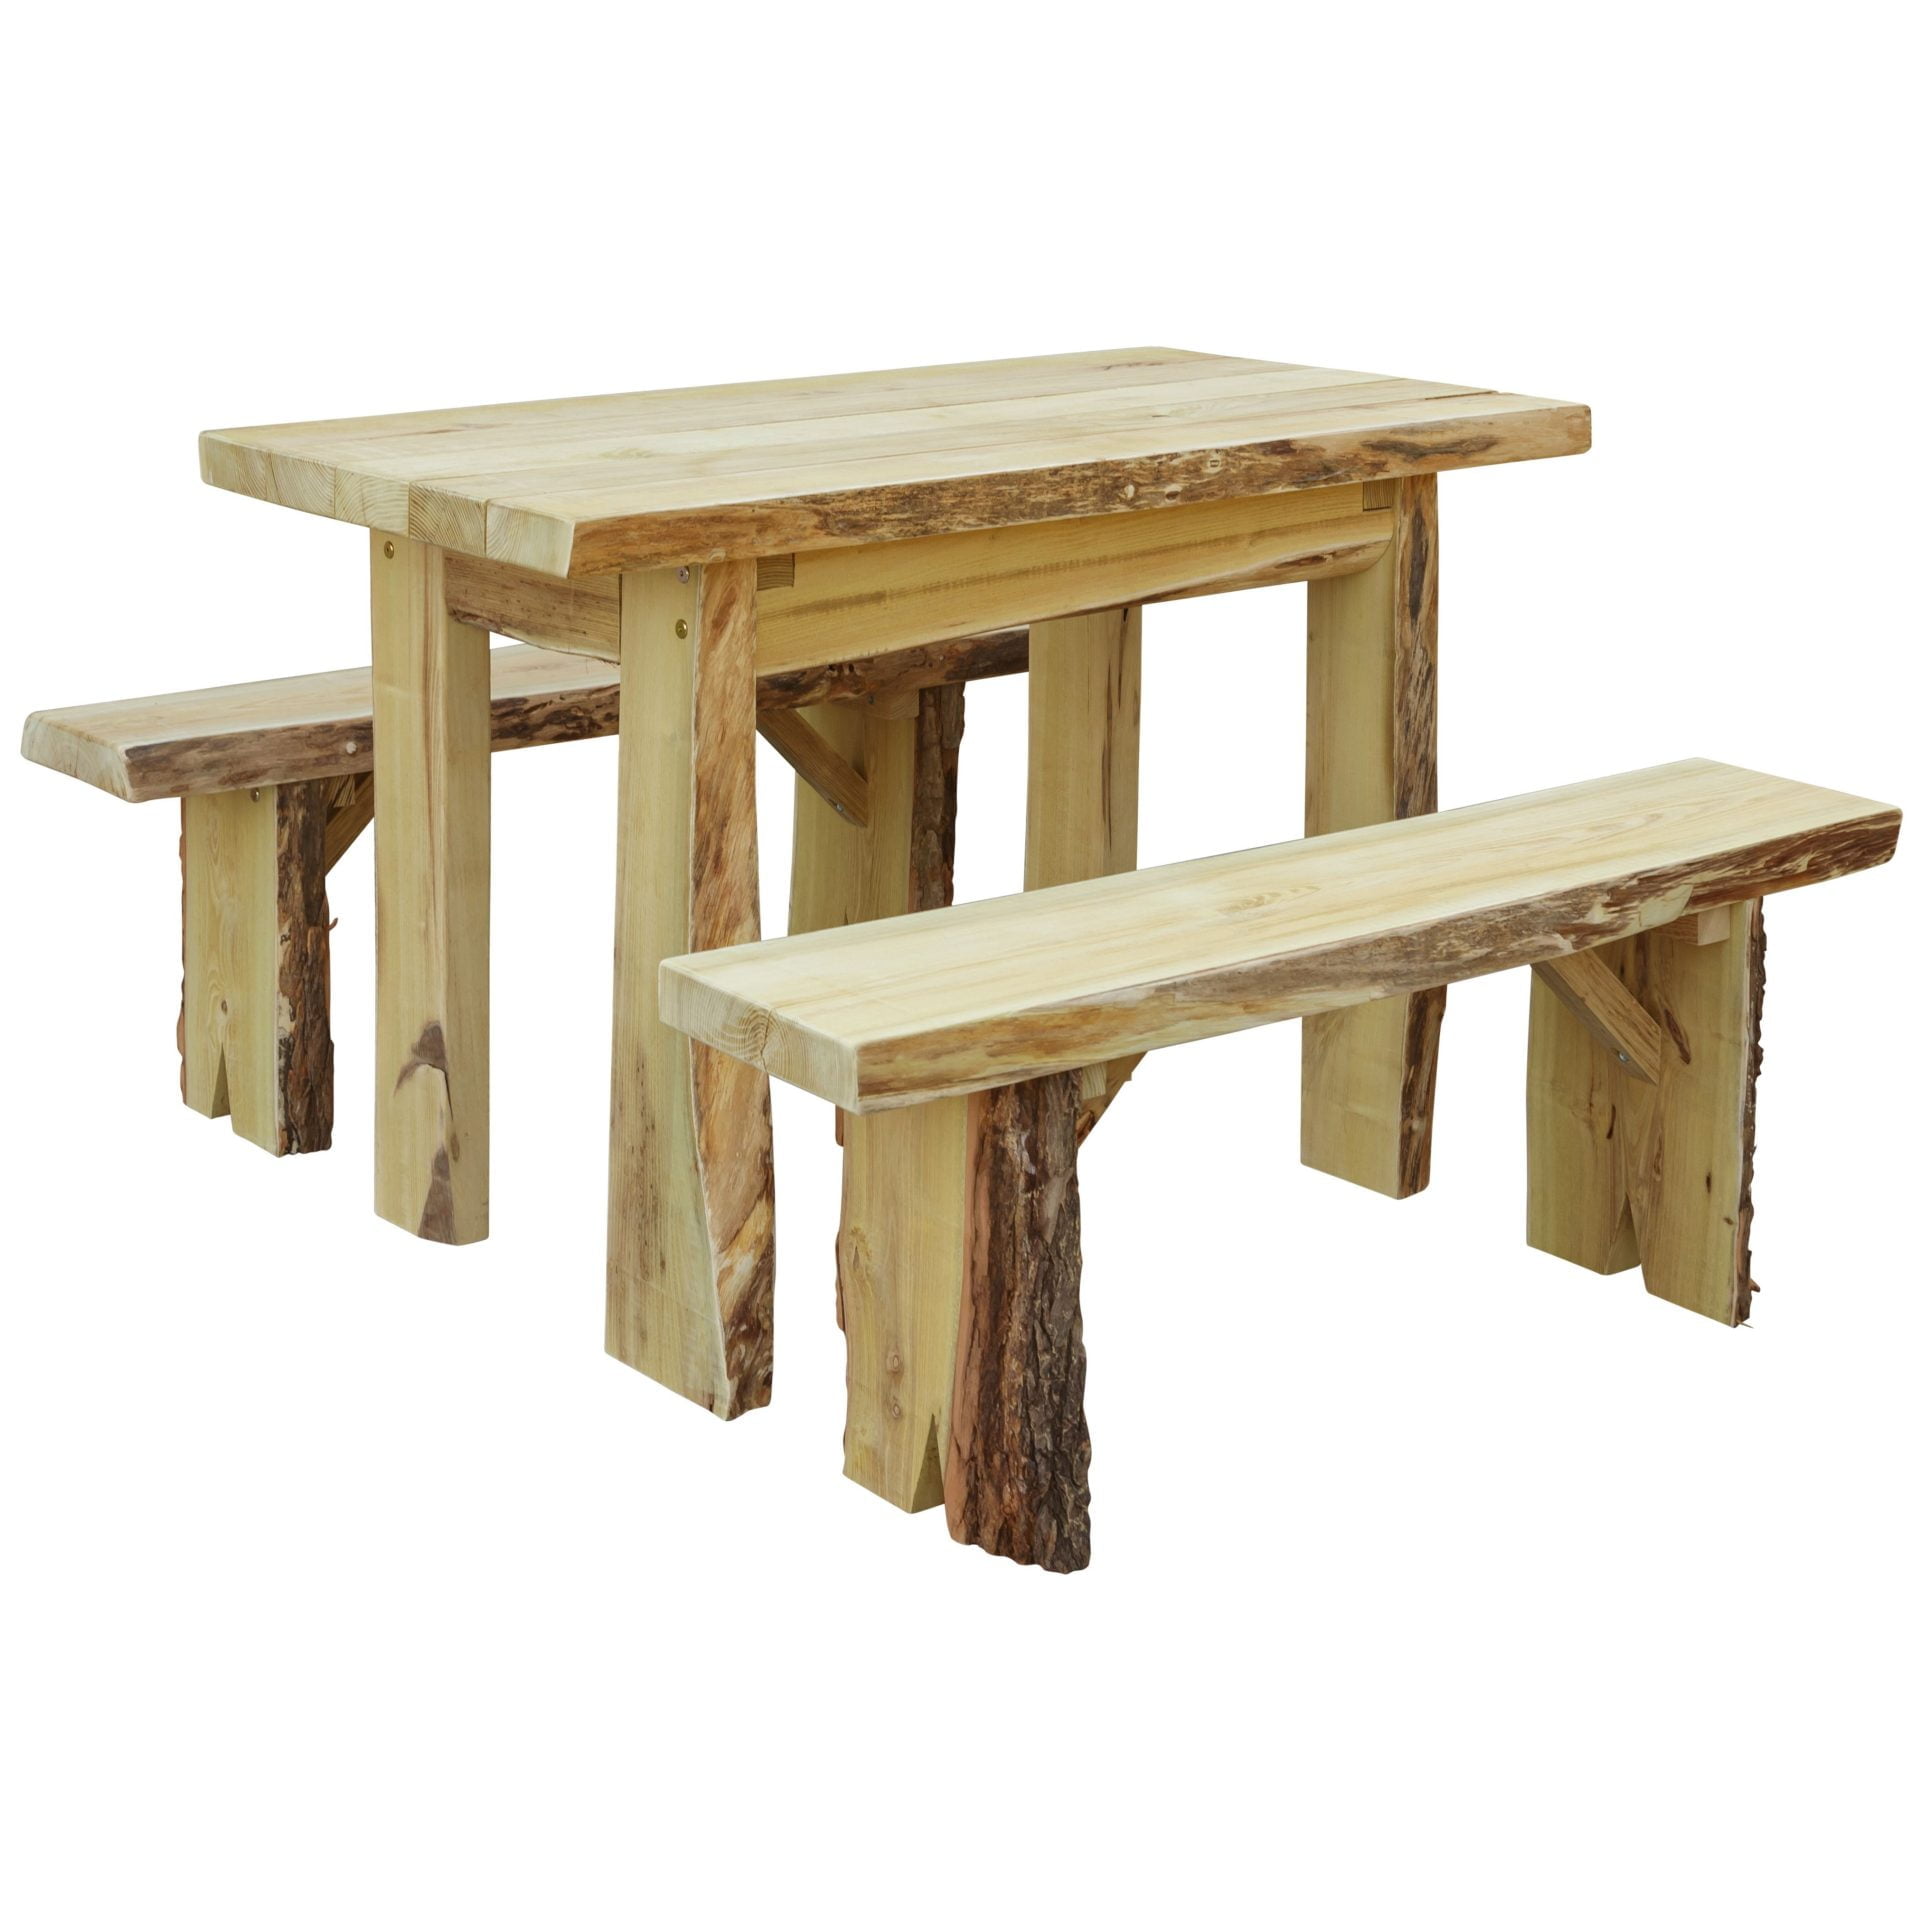 Live Edge Locust Autumnwood Table with Wildwood Benches